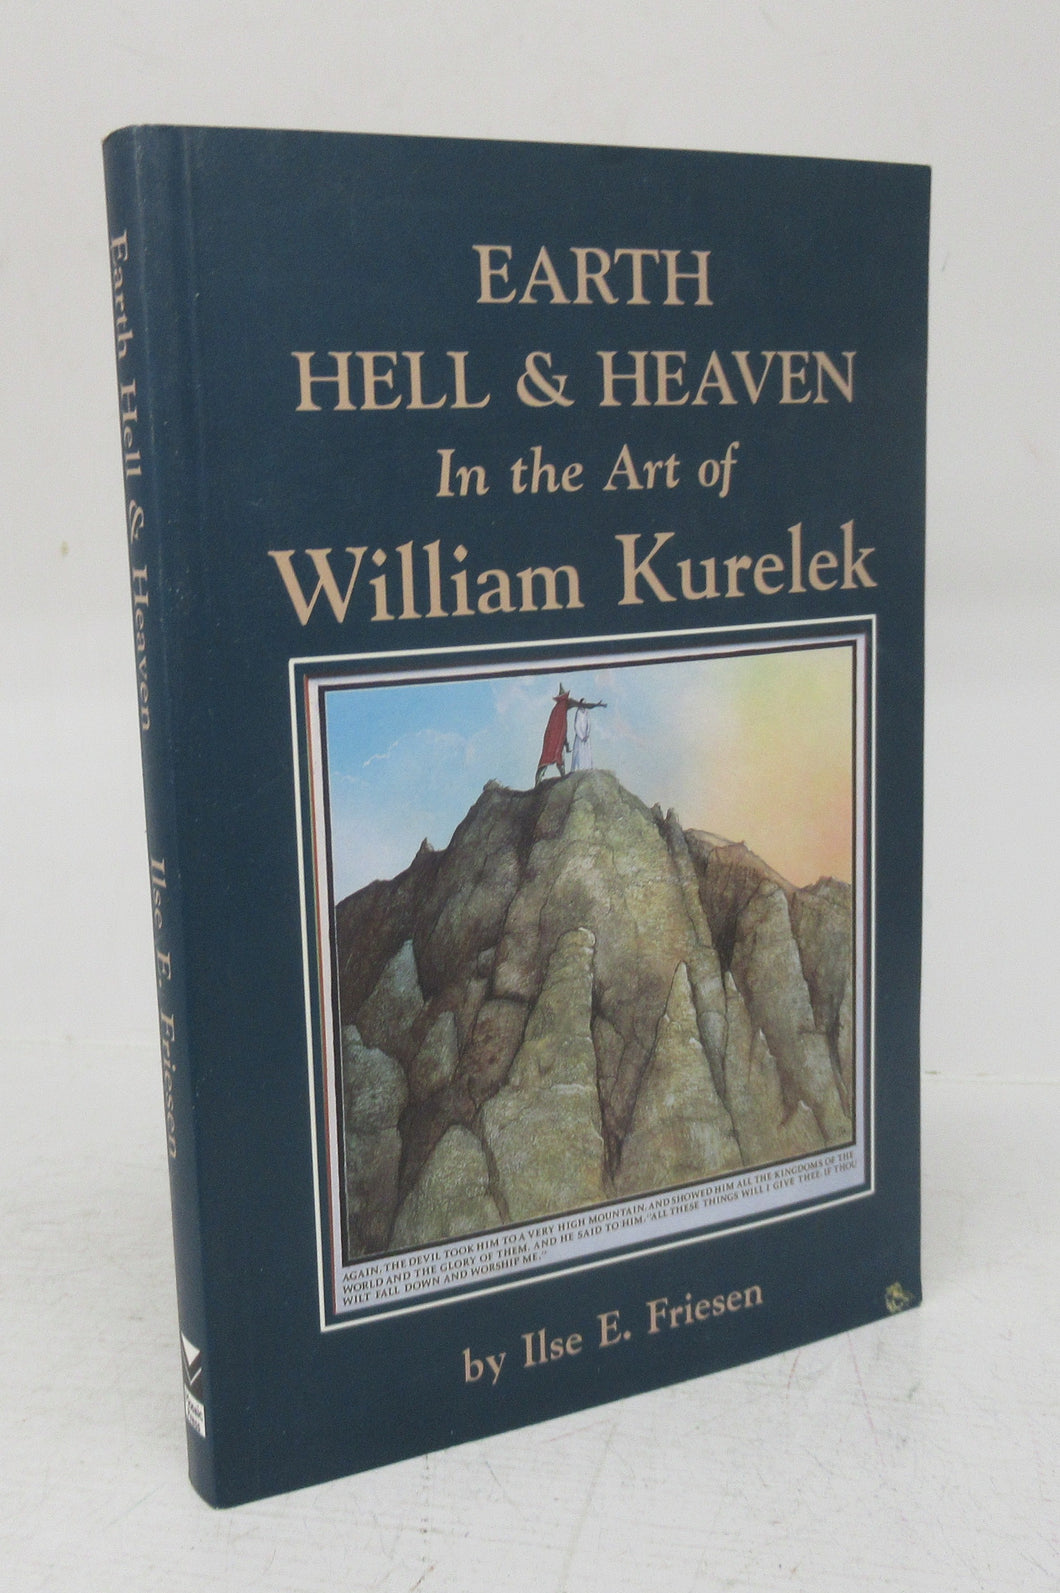 Earth Hell & Heaven In the Art of William Kurelek